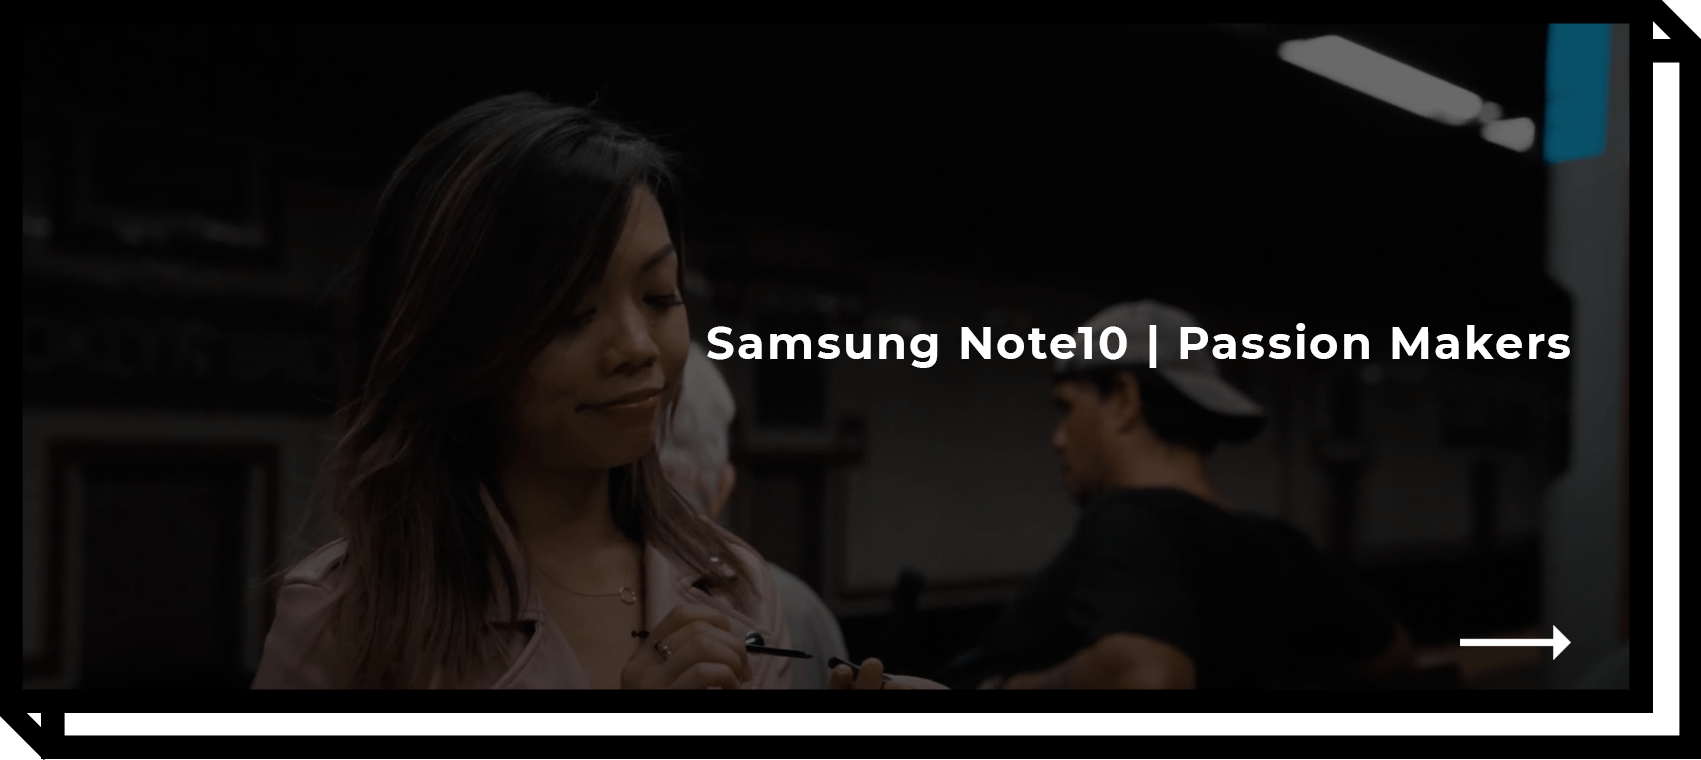 Samsung Note10 - Passion Makers (Jenn)